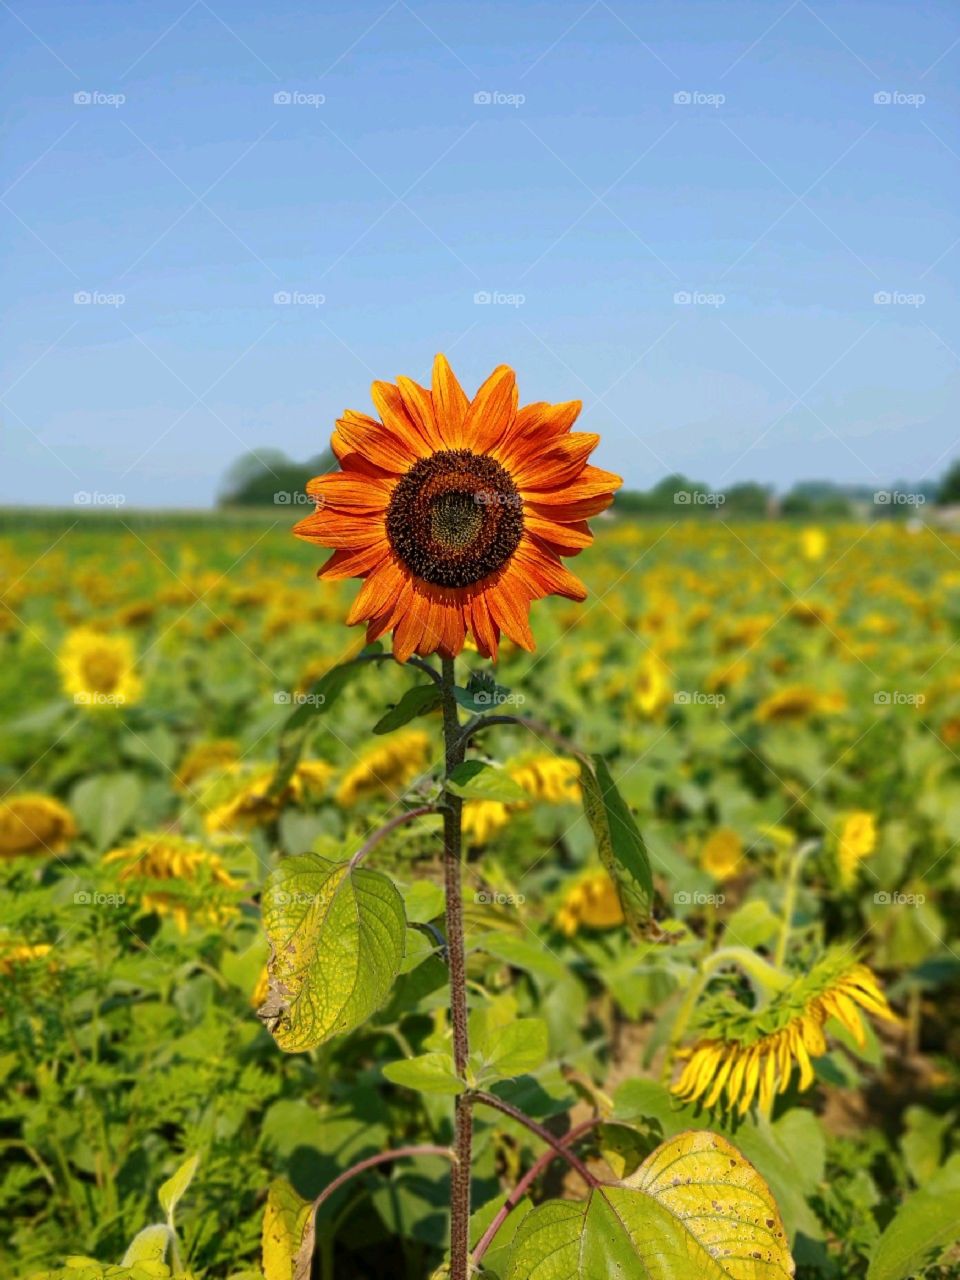 Nature at its finest, beautiful sunflower field 